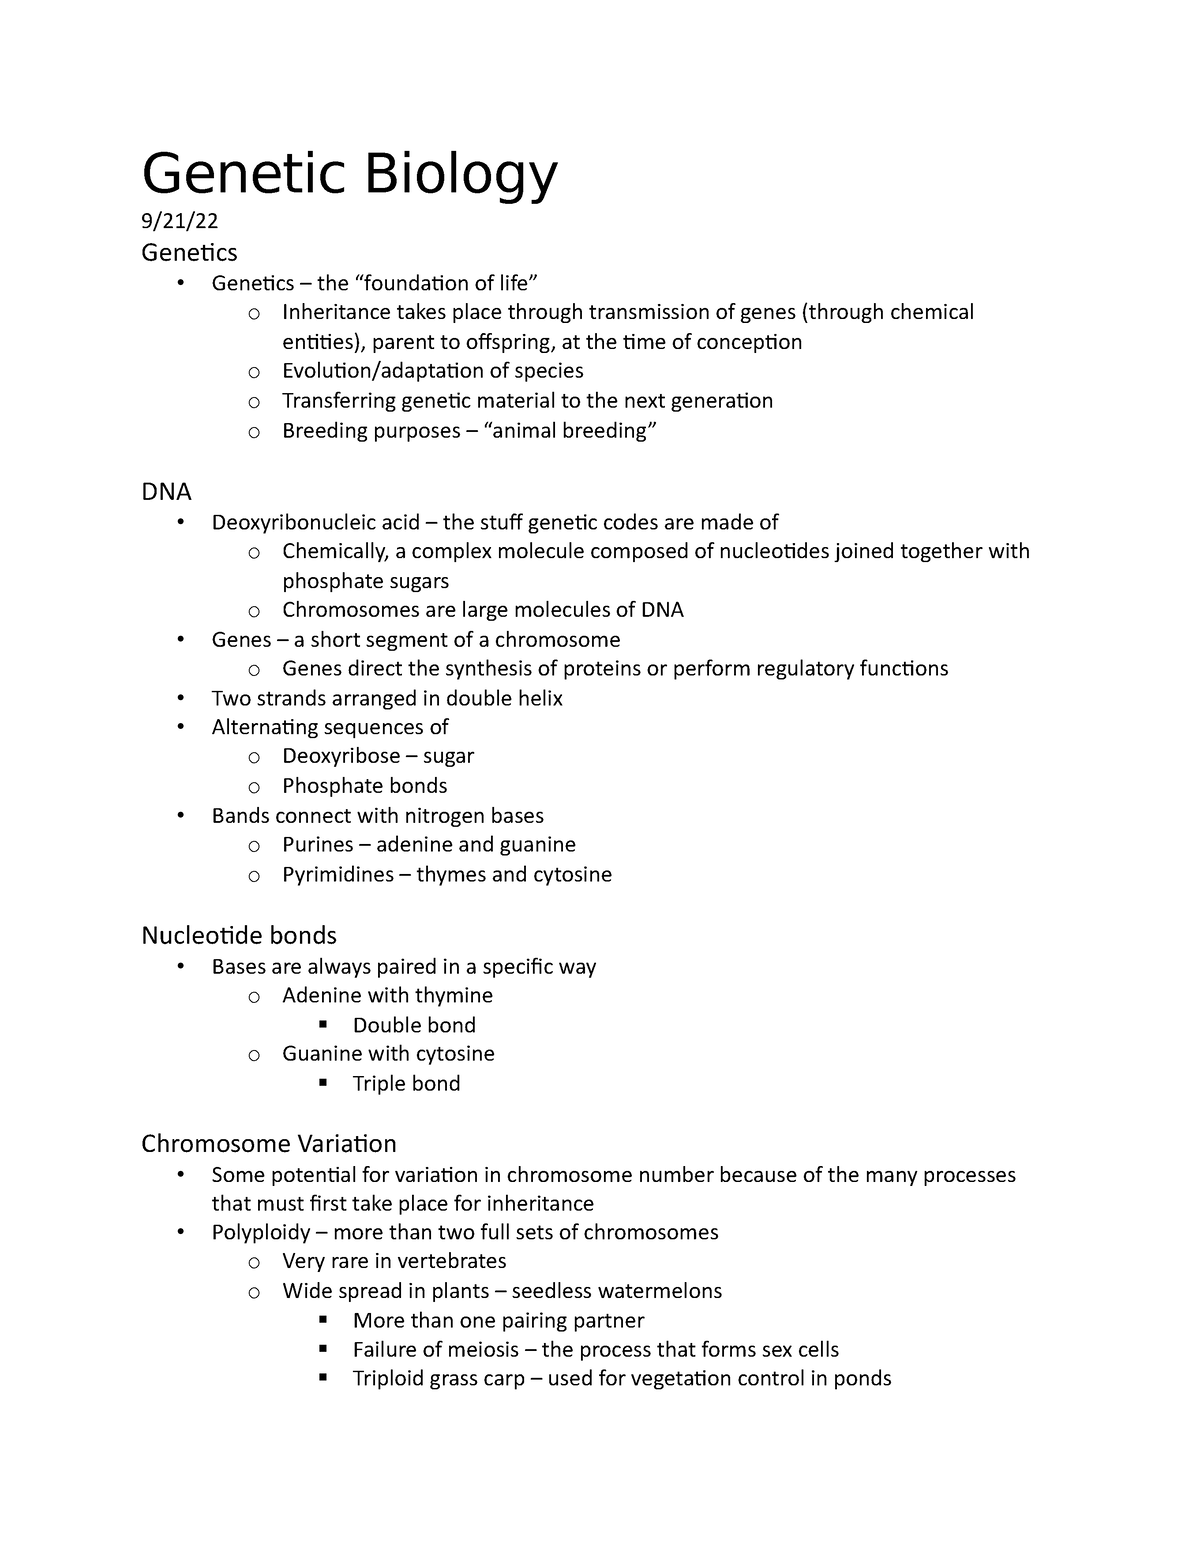 genetic-biology-genetic-biology-9-21-genetics-genetics-the-foundation-of-life-o